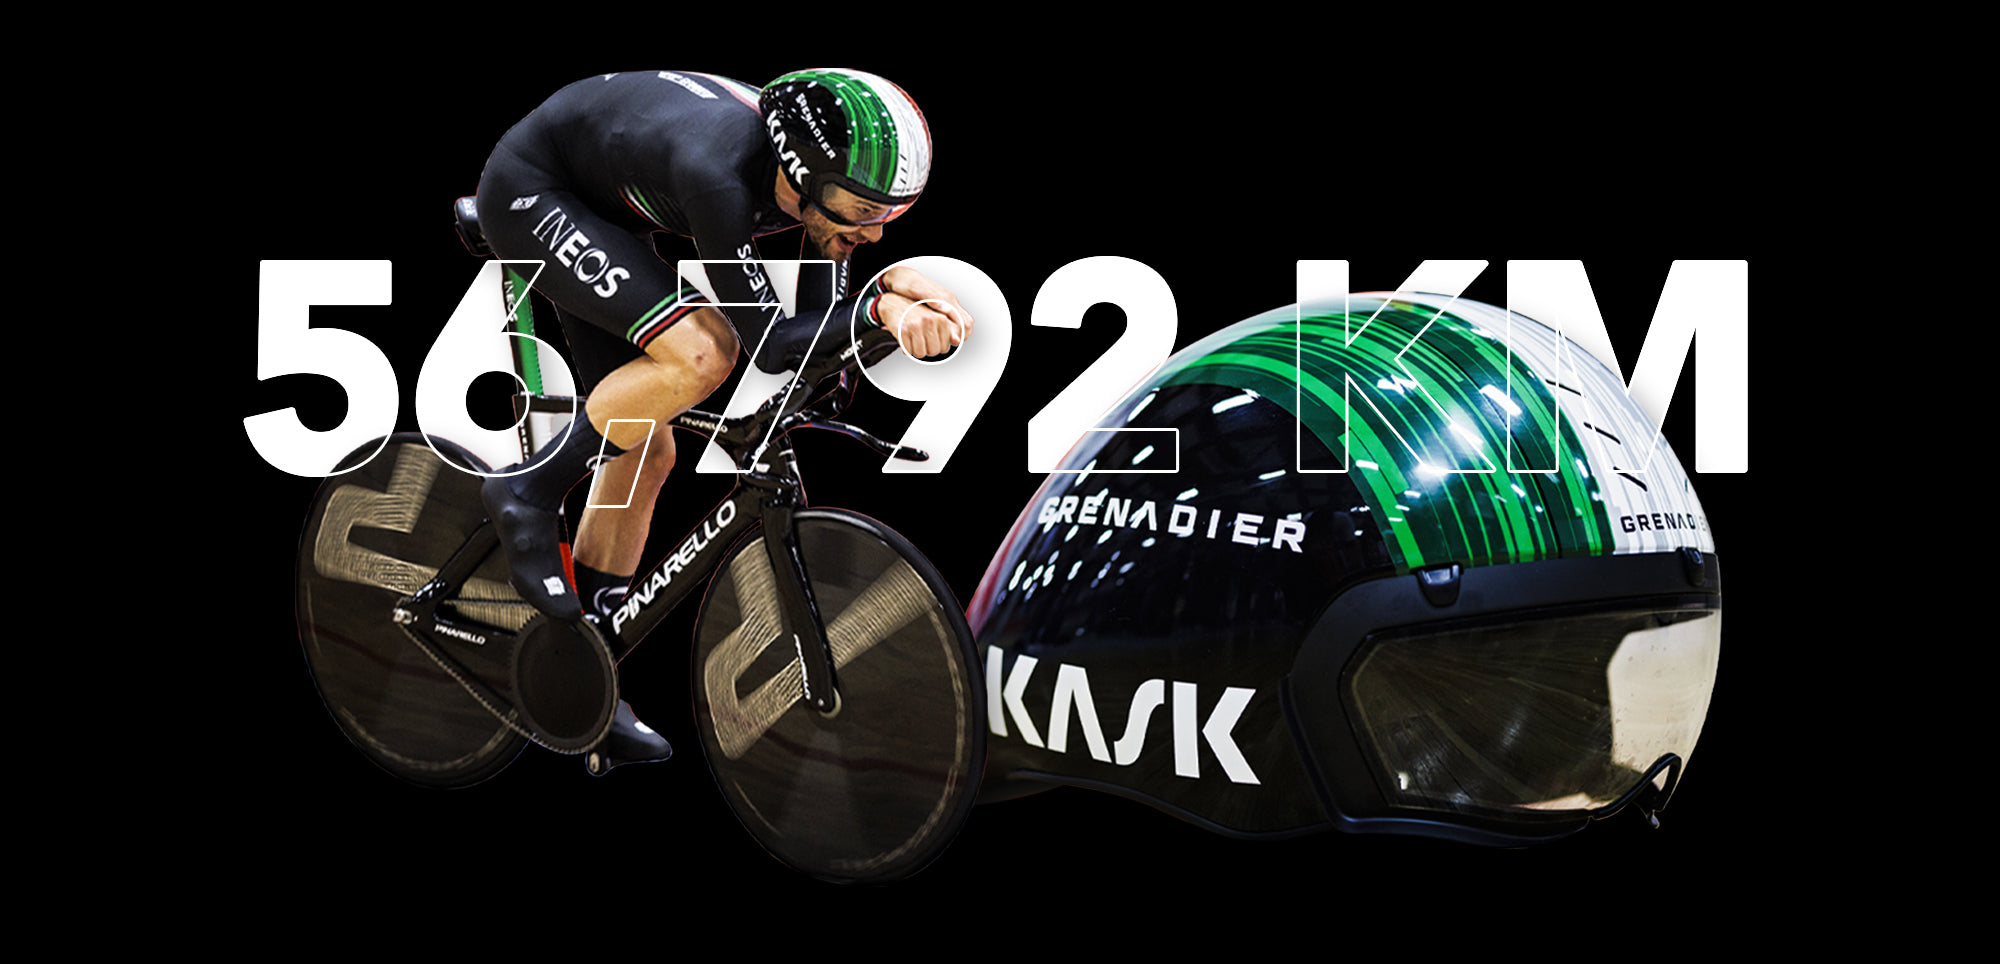 56,792 KM – KASK 贊助車手 FILIPPO GANNA 打破 UCI 小時記錄